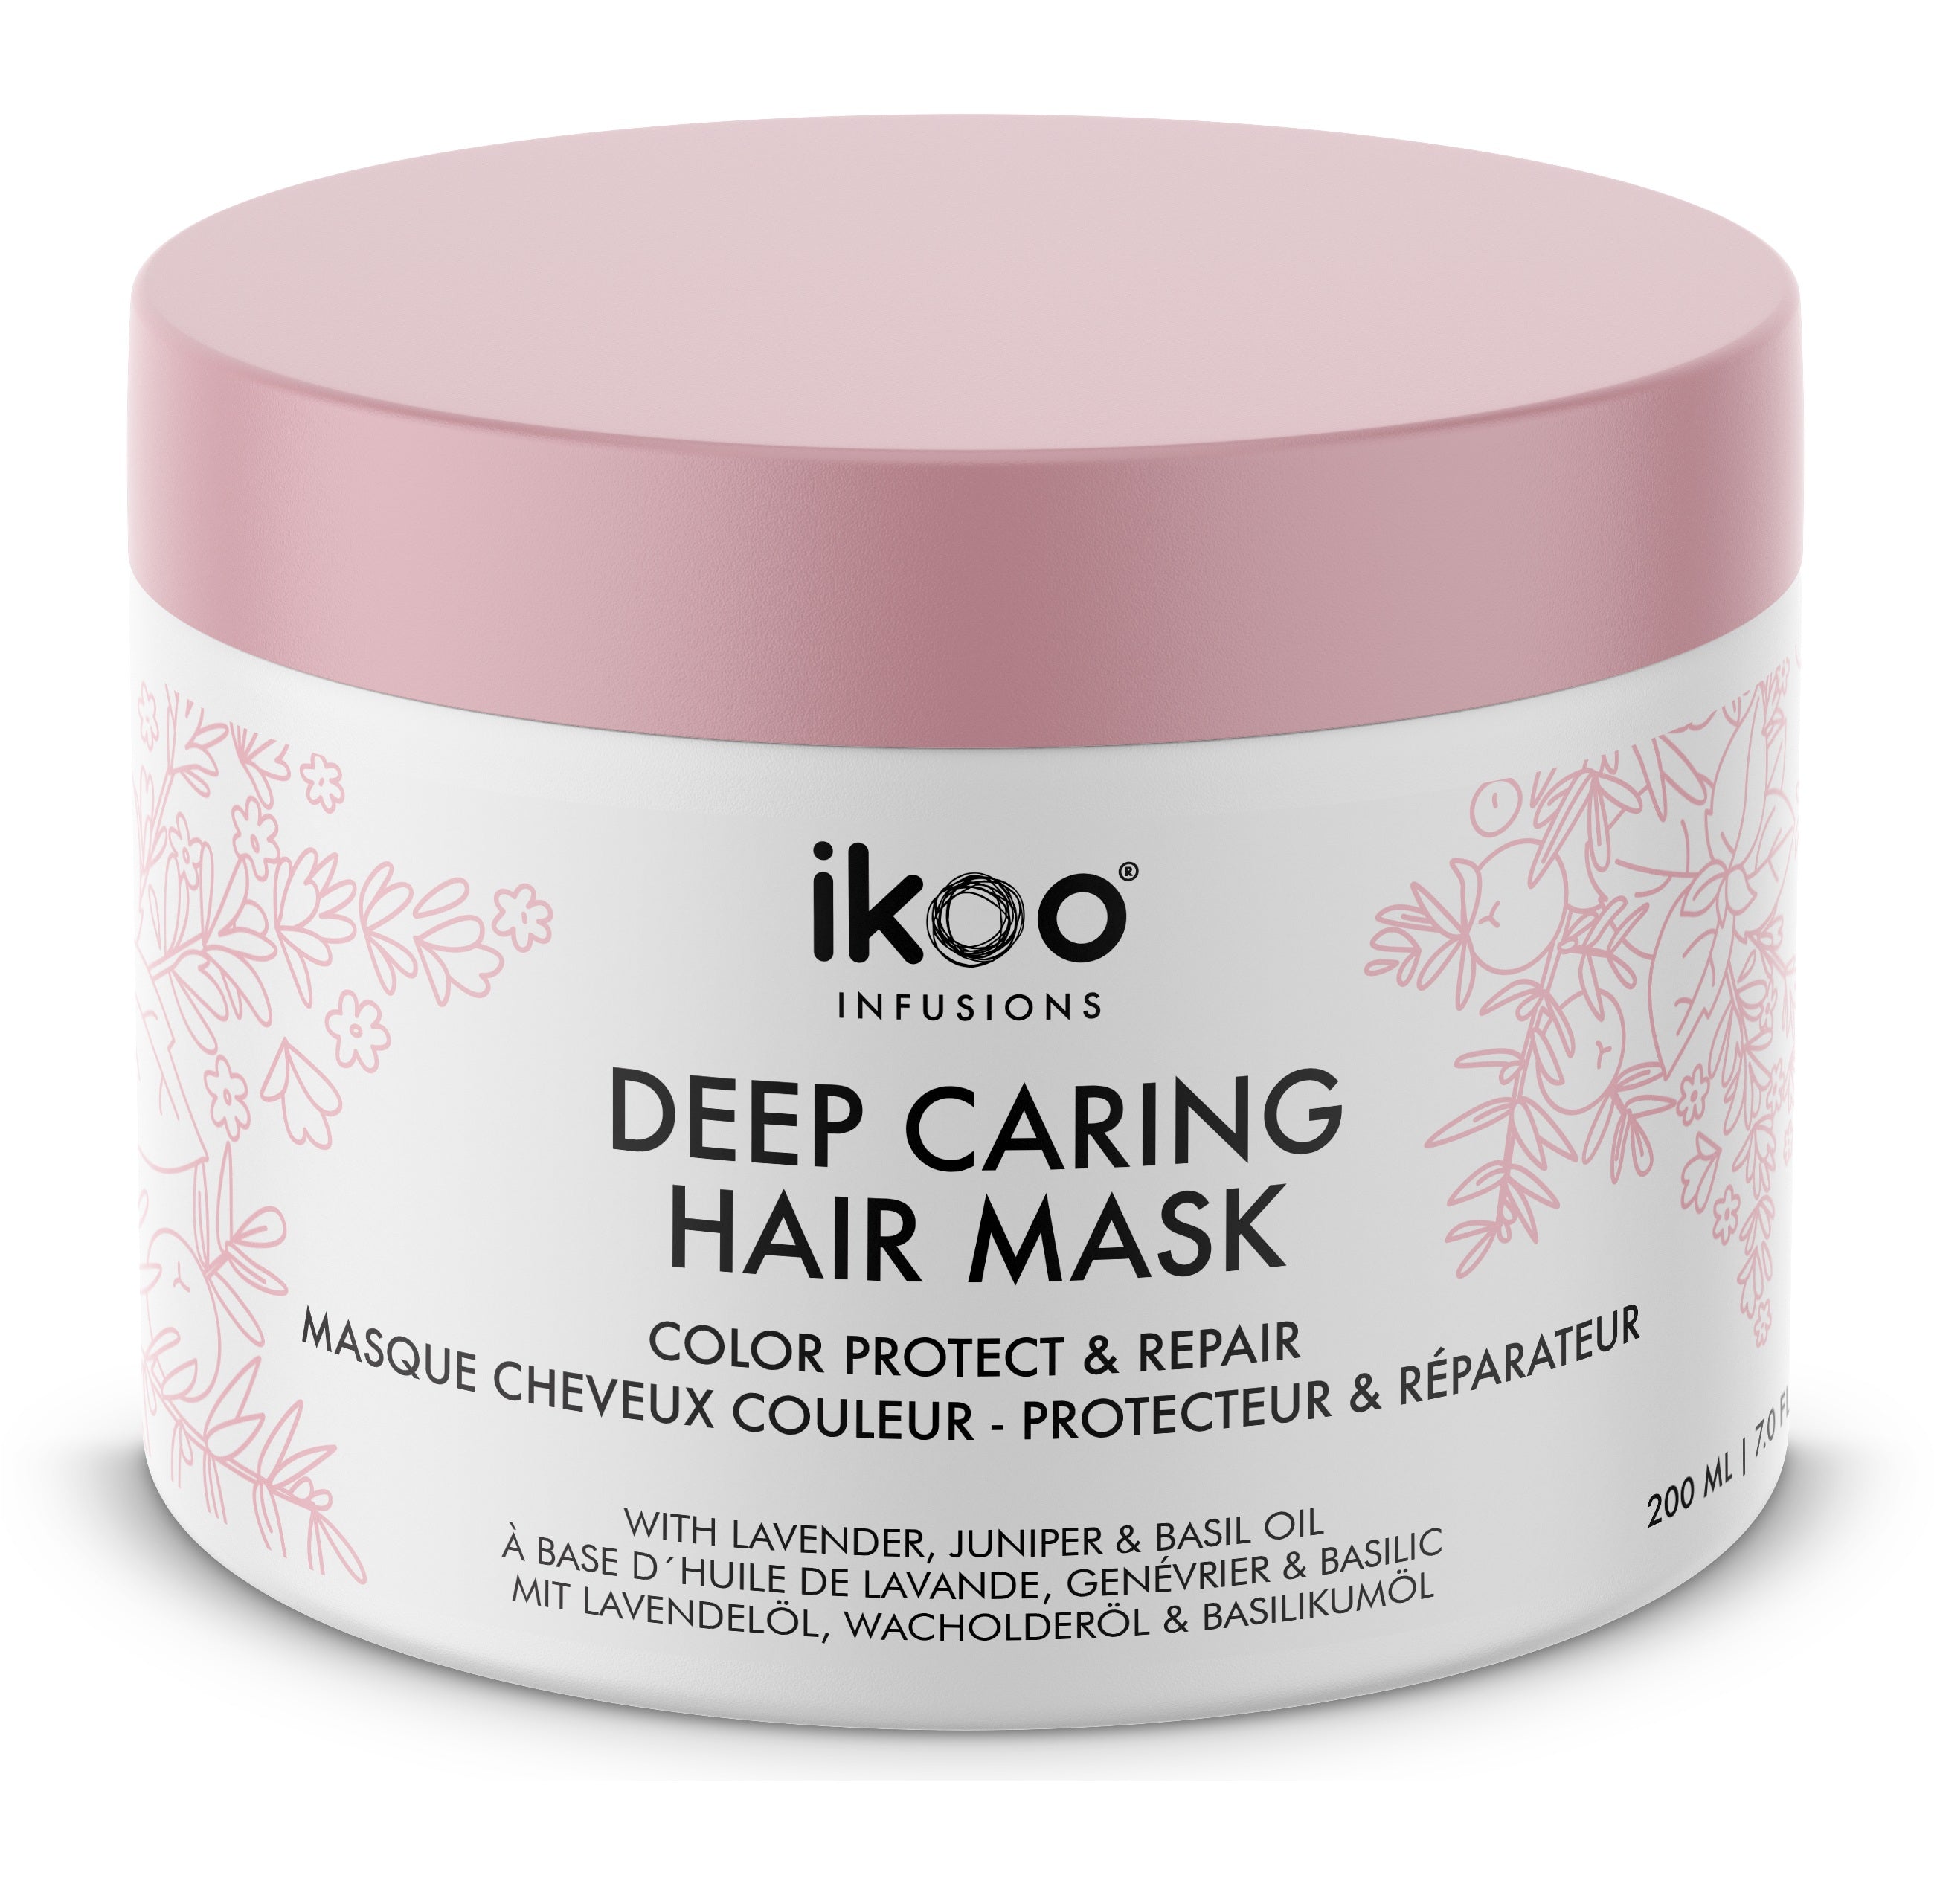 Ikoo Infusions - Deep Caring Mask - Color Protect & Repair - 200 ml